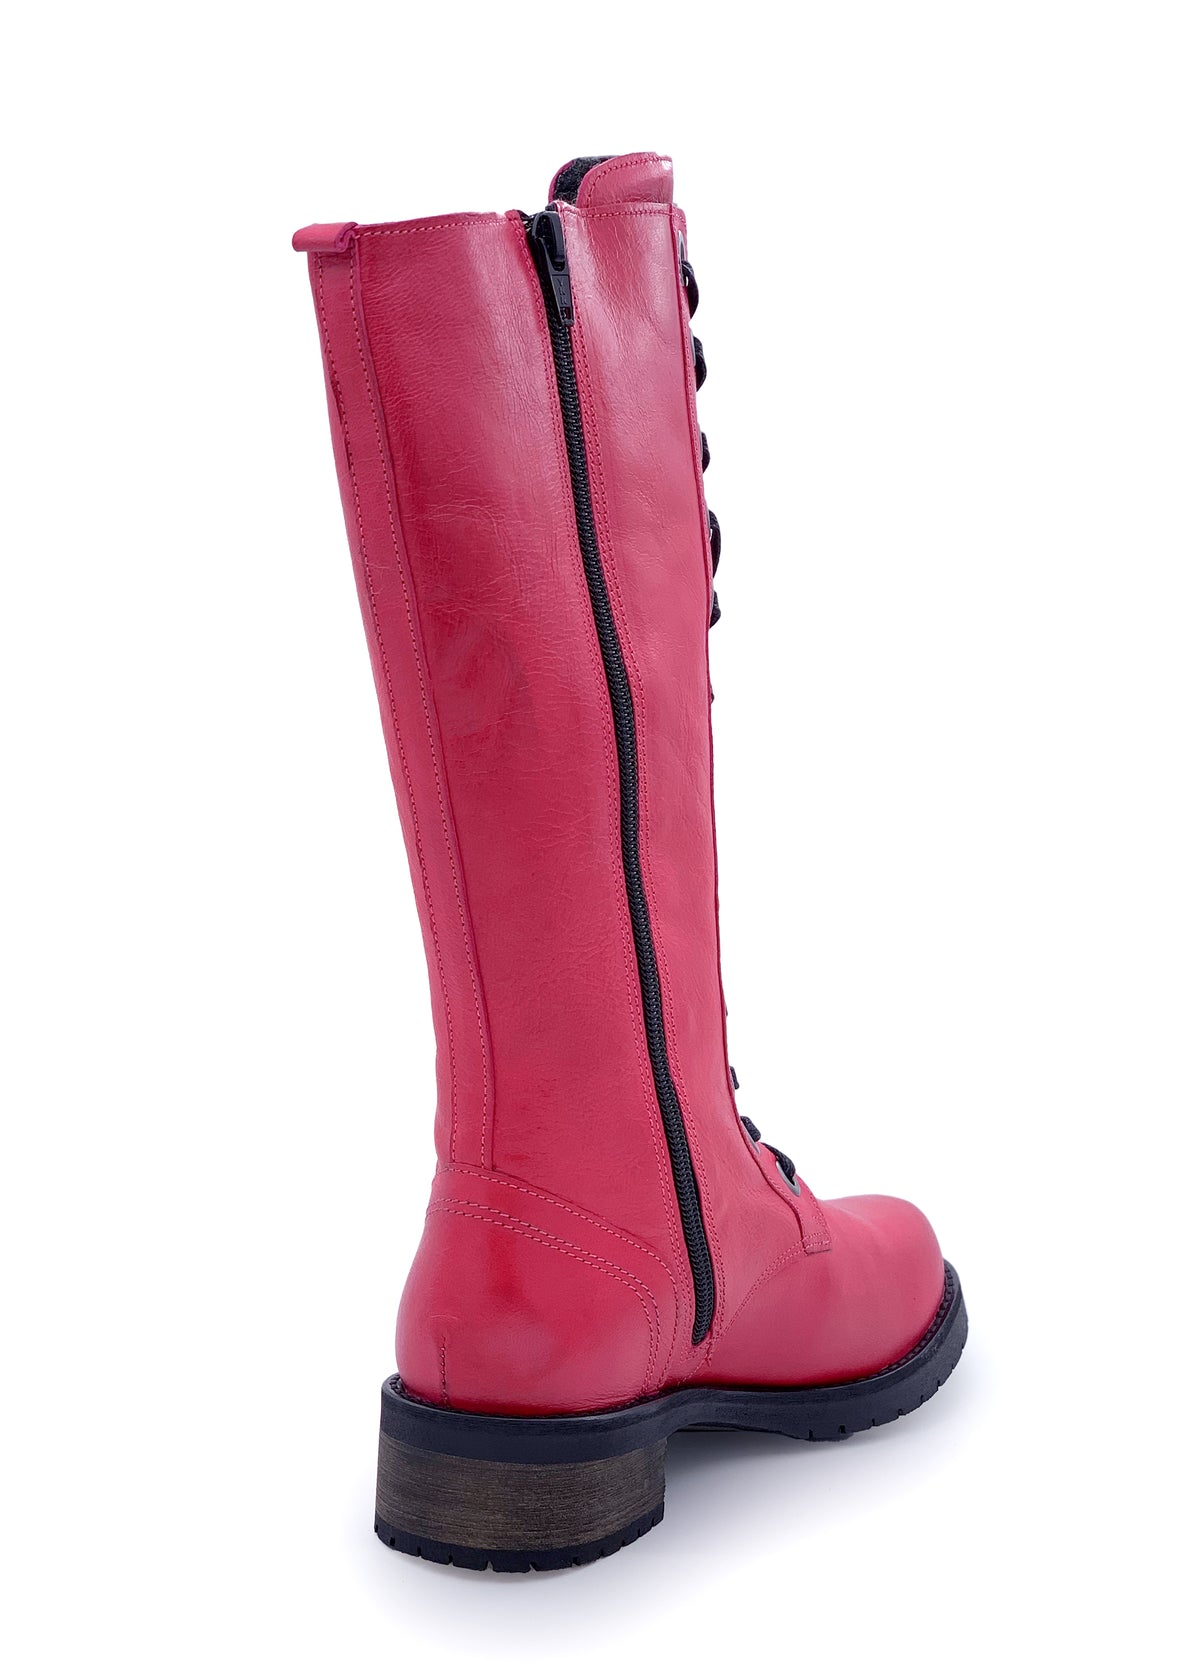 Maihari boots - Lotta, rosa